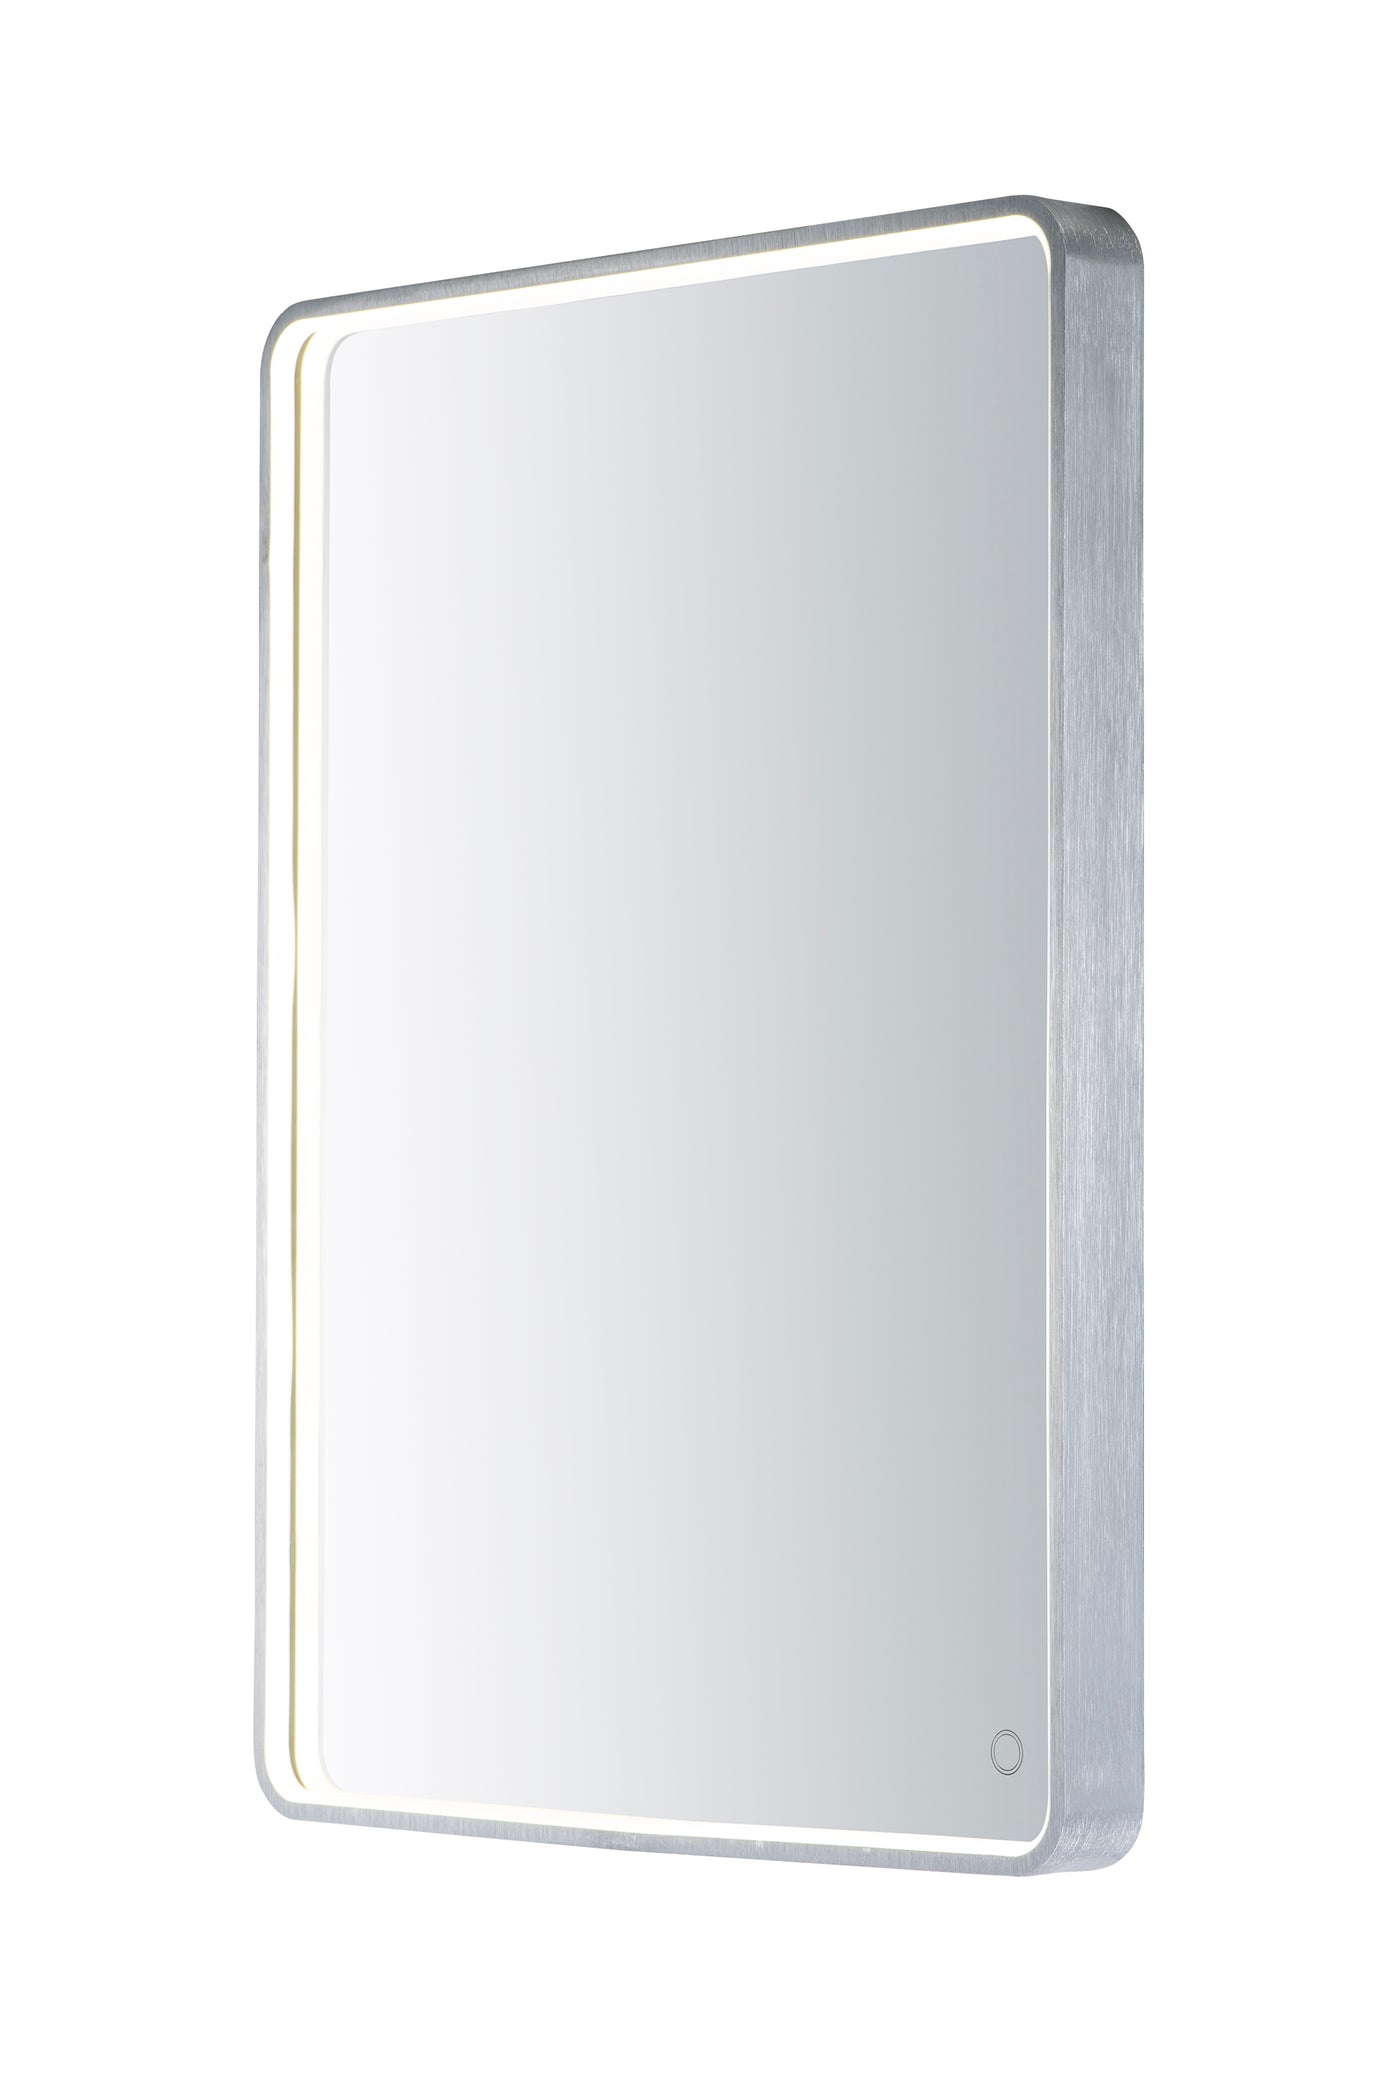  LED Rectangular Mirror E42014-90AL Decor